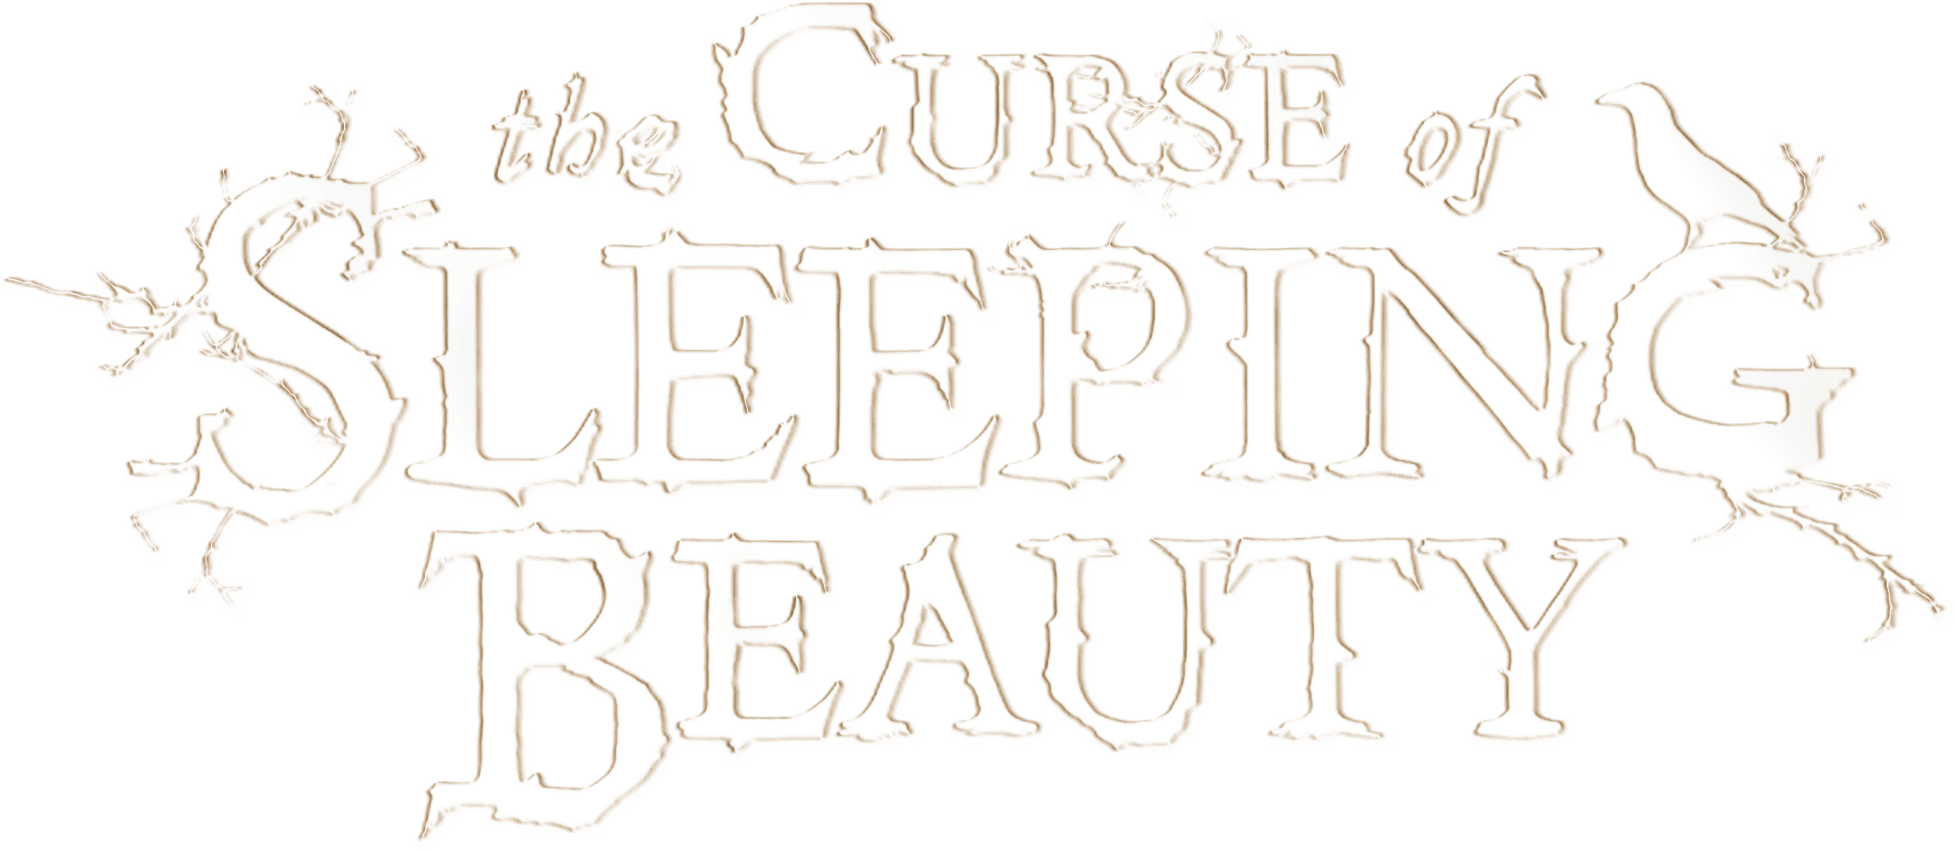 The Curse of Sleeping Beauty logo